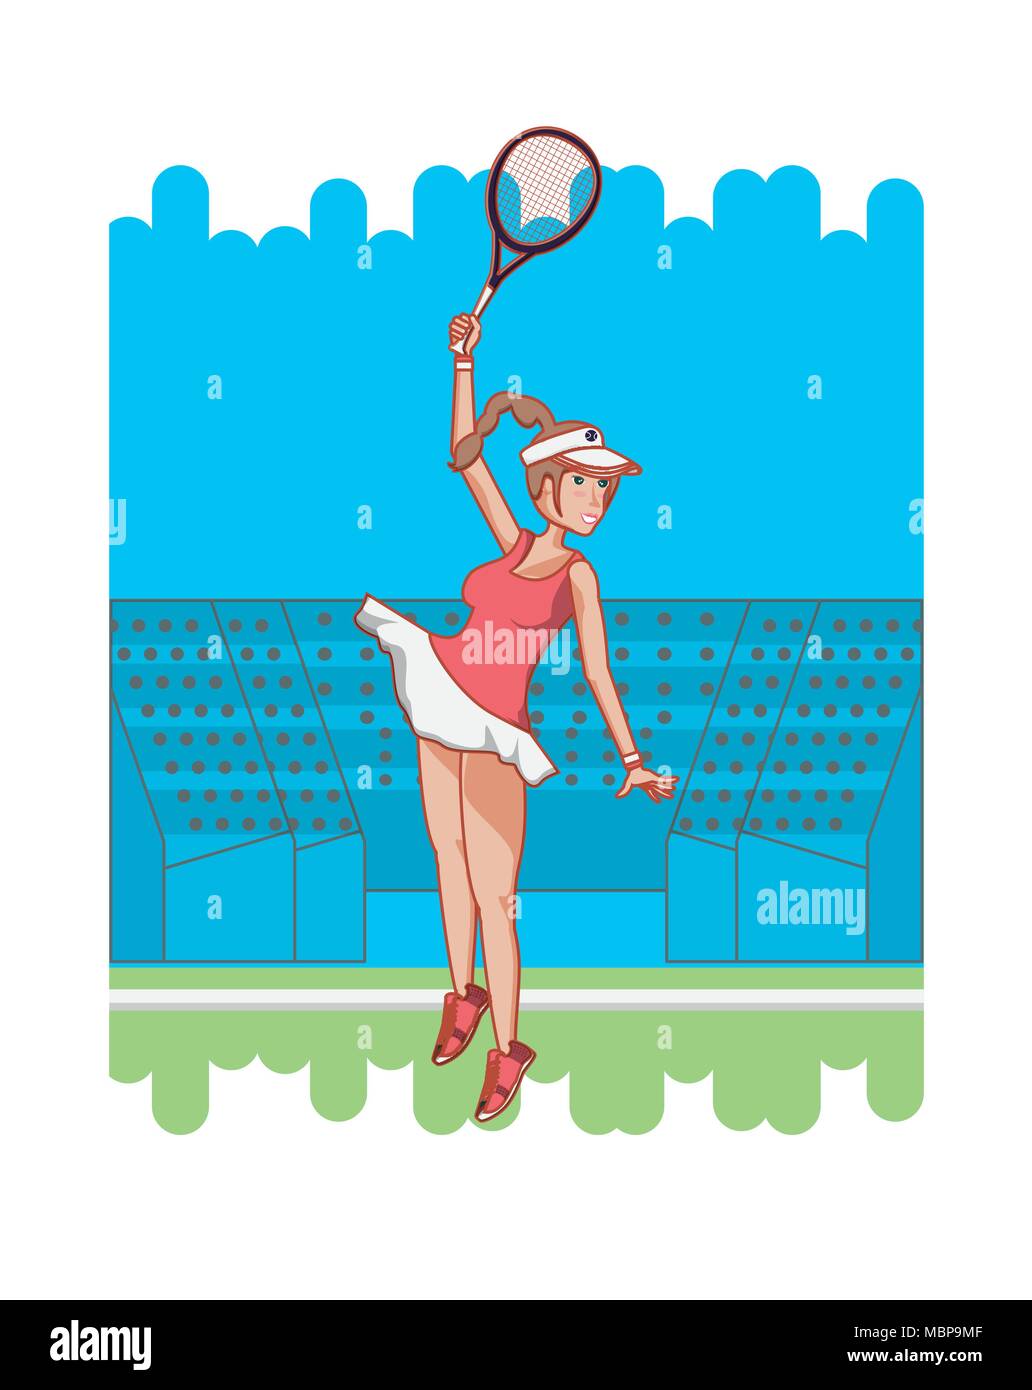 Donna giocando a tennis carattere illustrazione vettoriale design Illustrazione Vettoriale